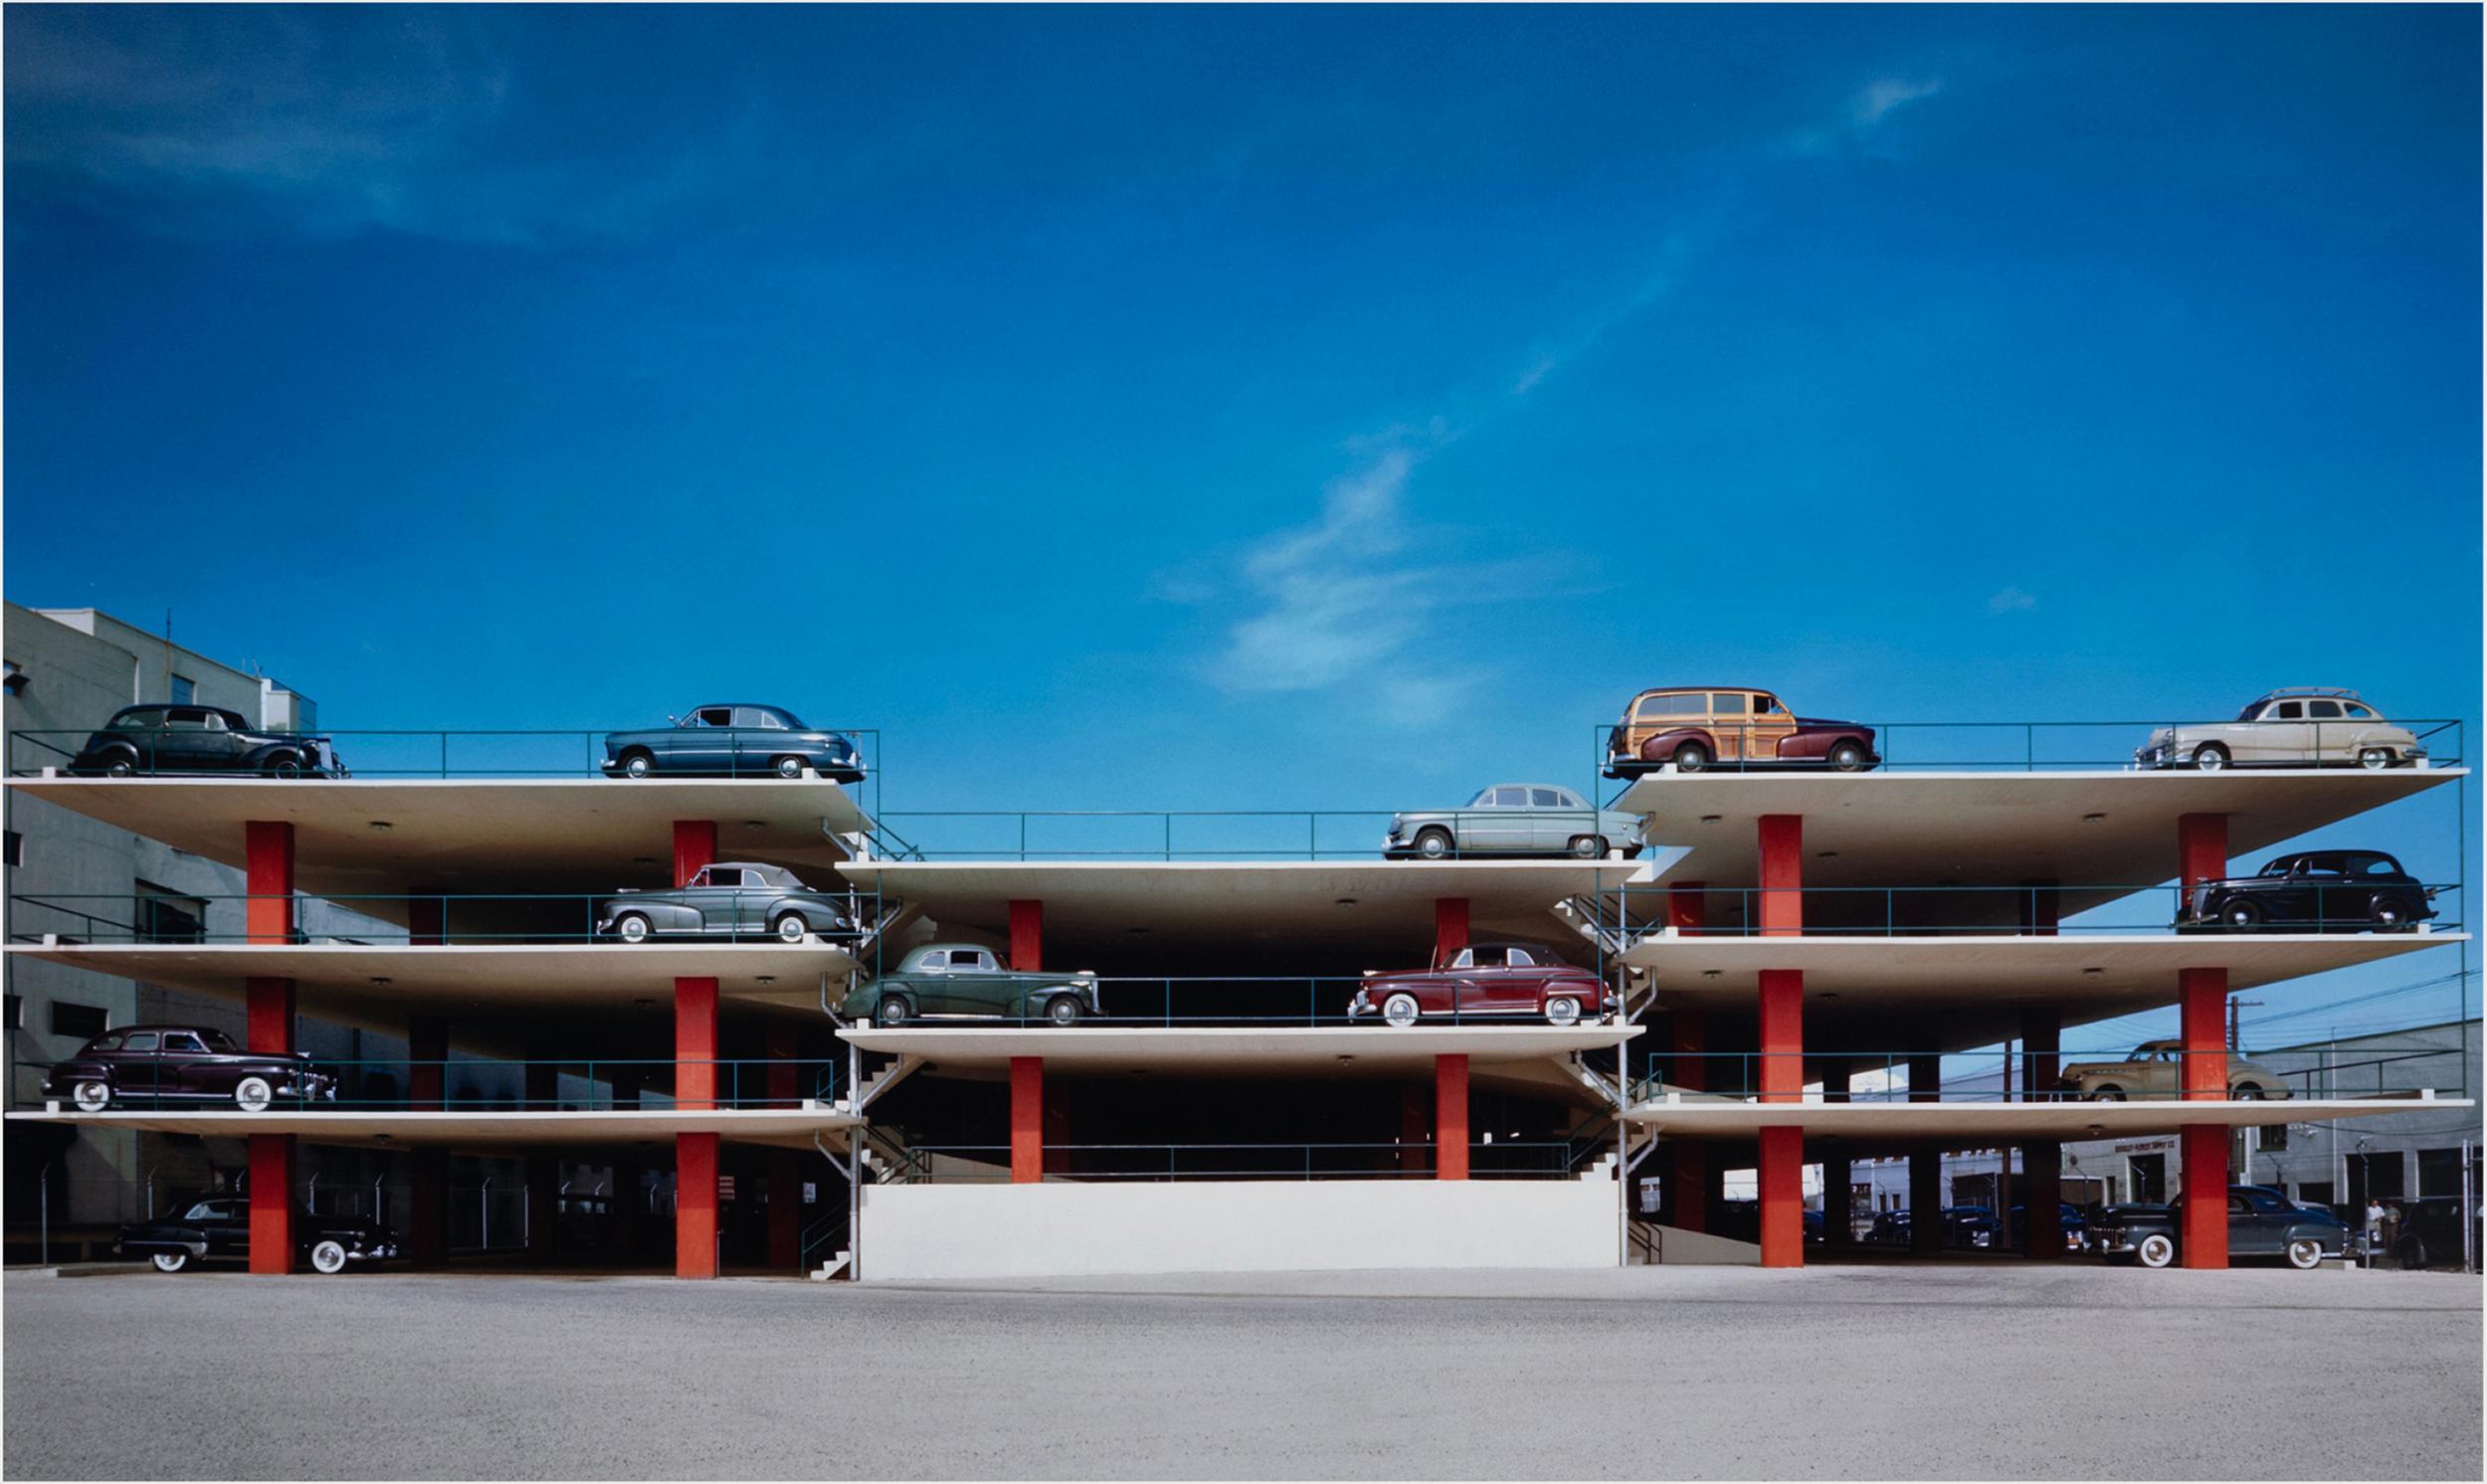 Miami Parking Garage, Robert Law Weed and Associates, Miami Fl. 